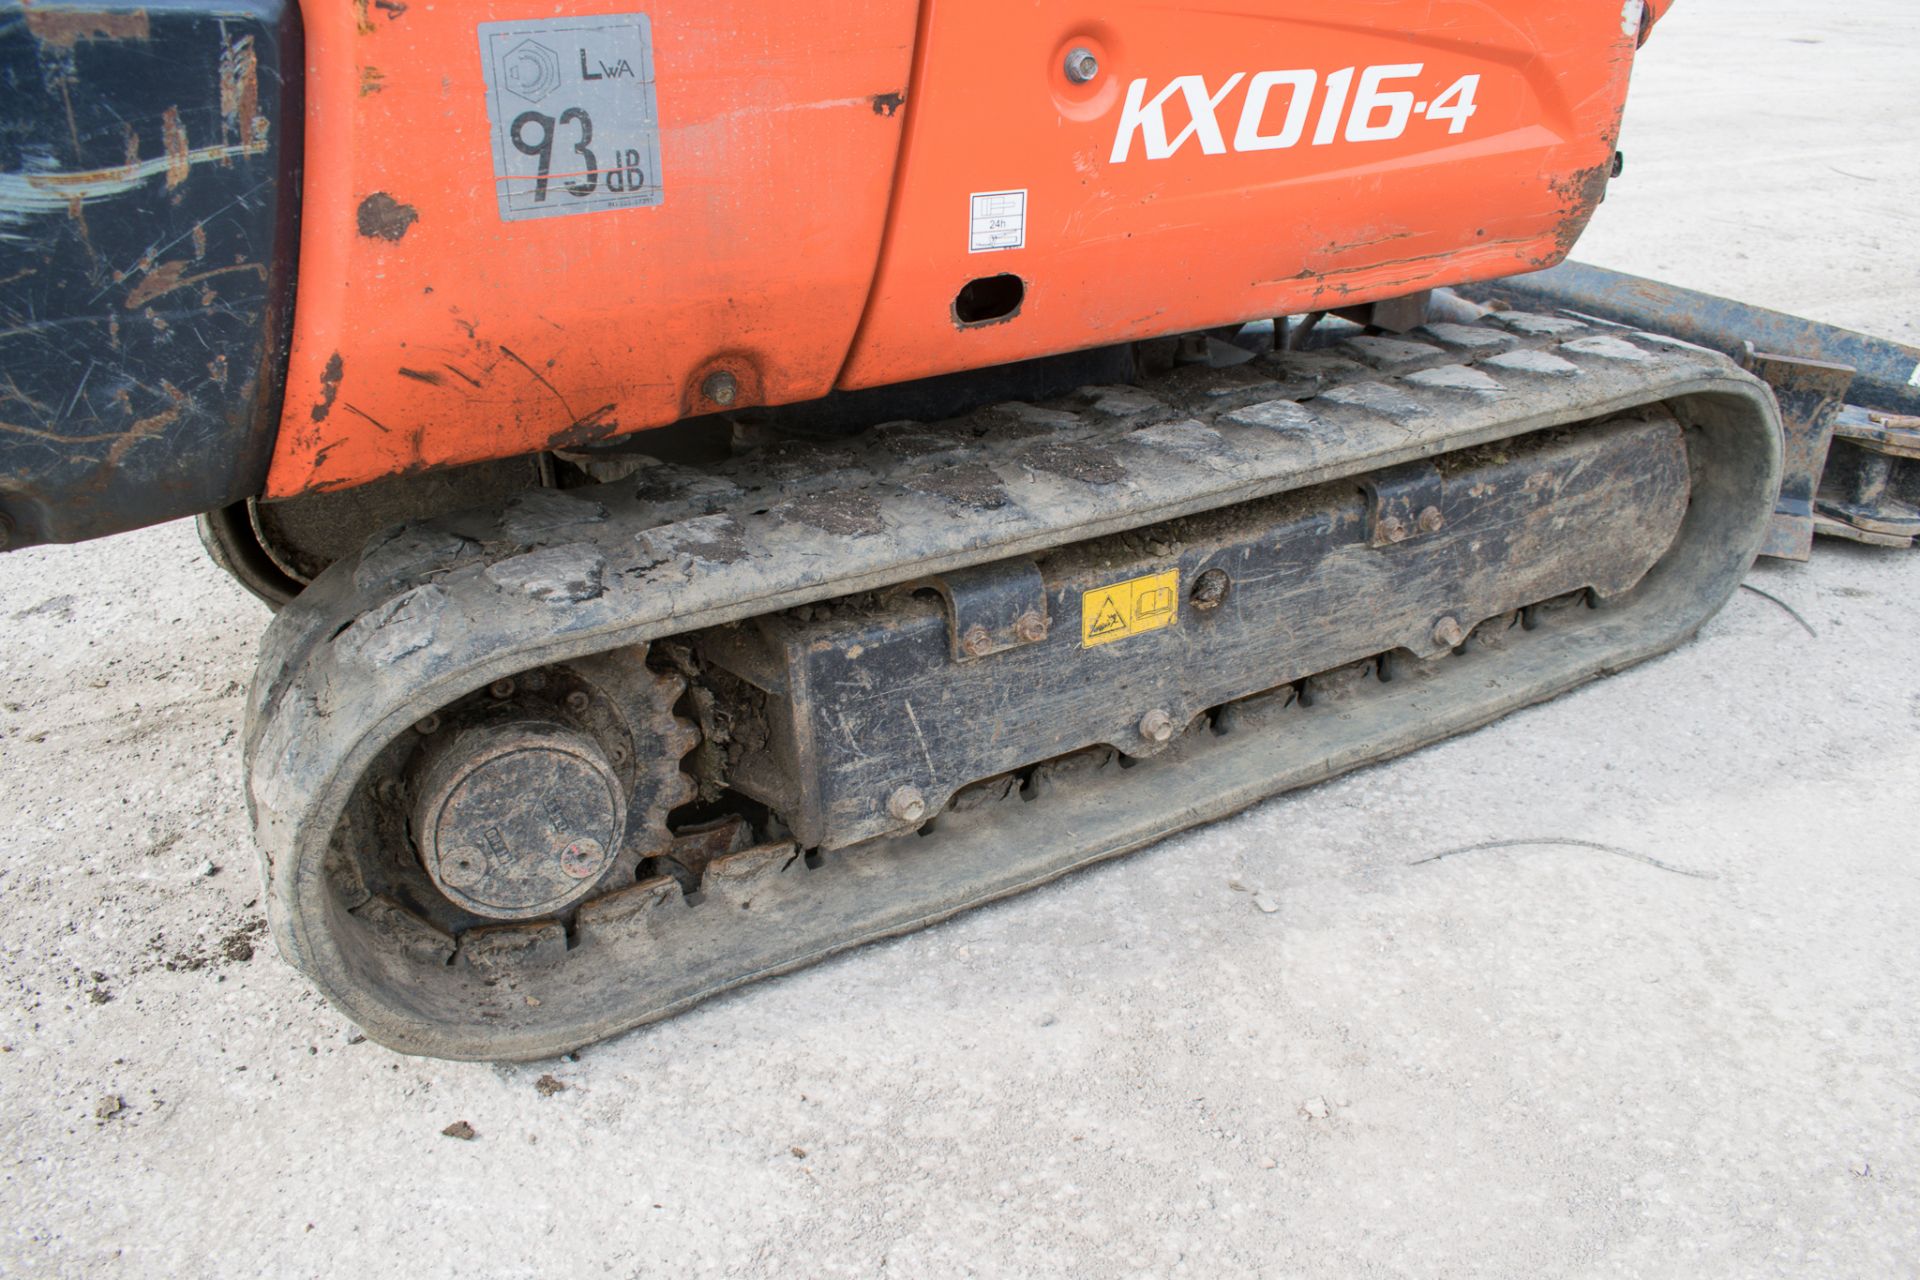 Kubota KX016-4 1.5 tonne rubber tracked mini excavator Year: S/N: 56667 Recorded Hours: 1544 - Image 7 of 13